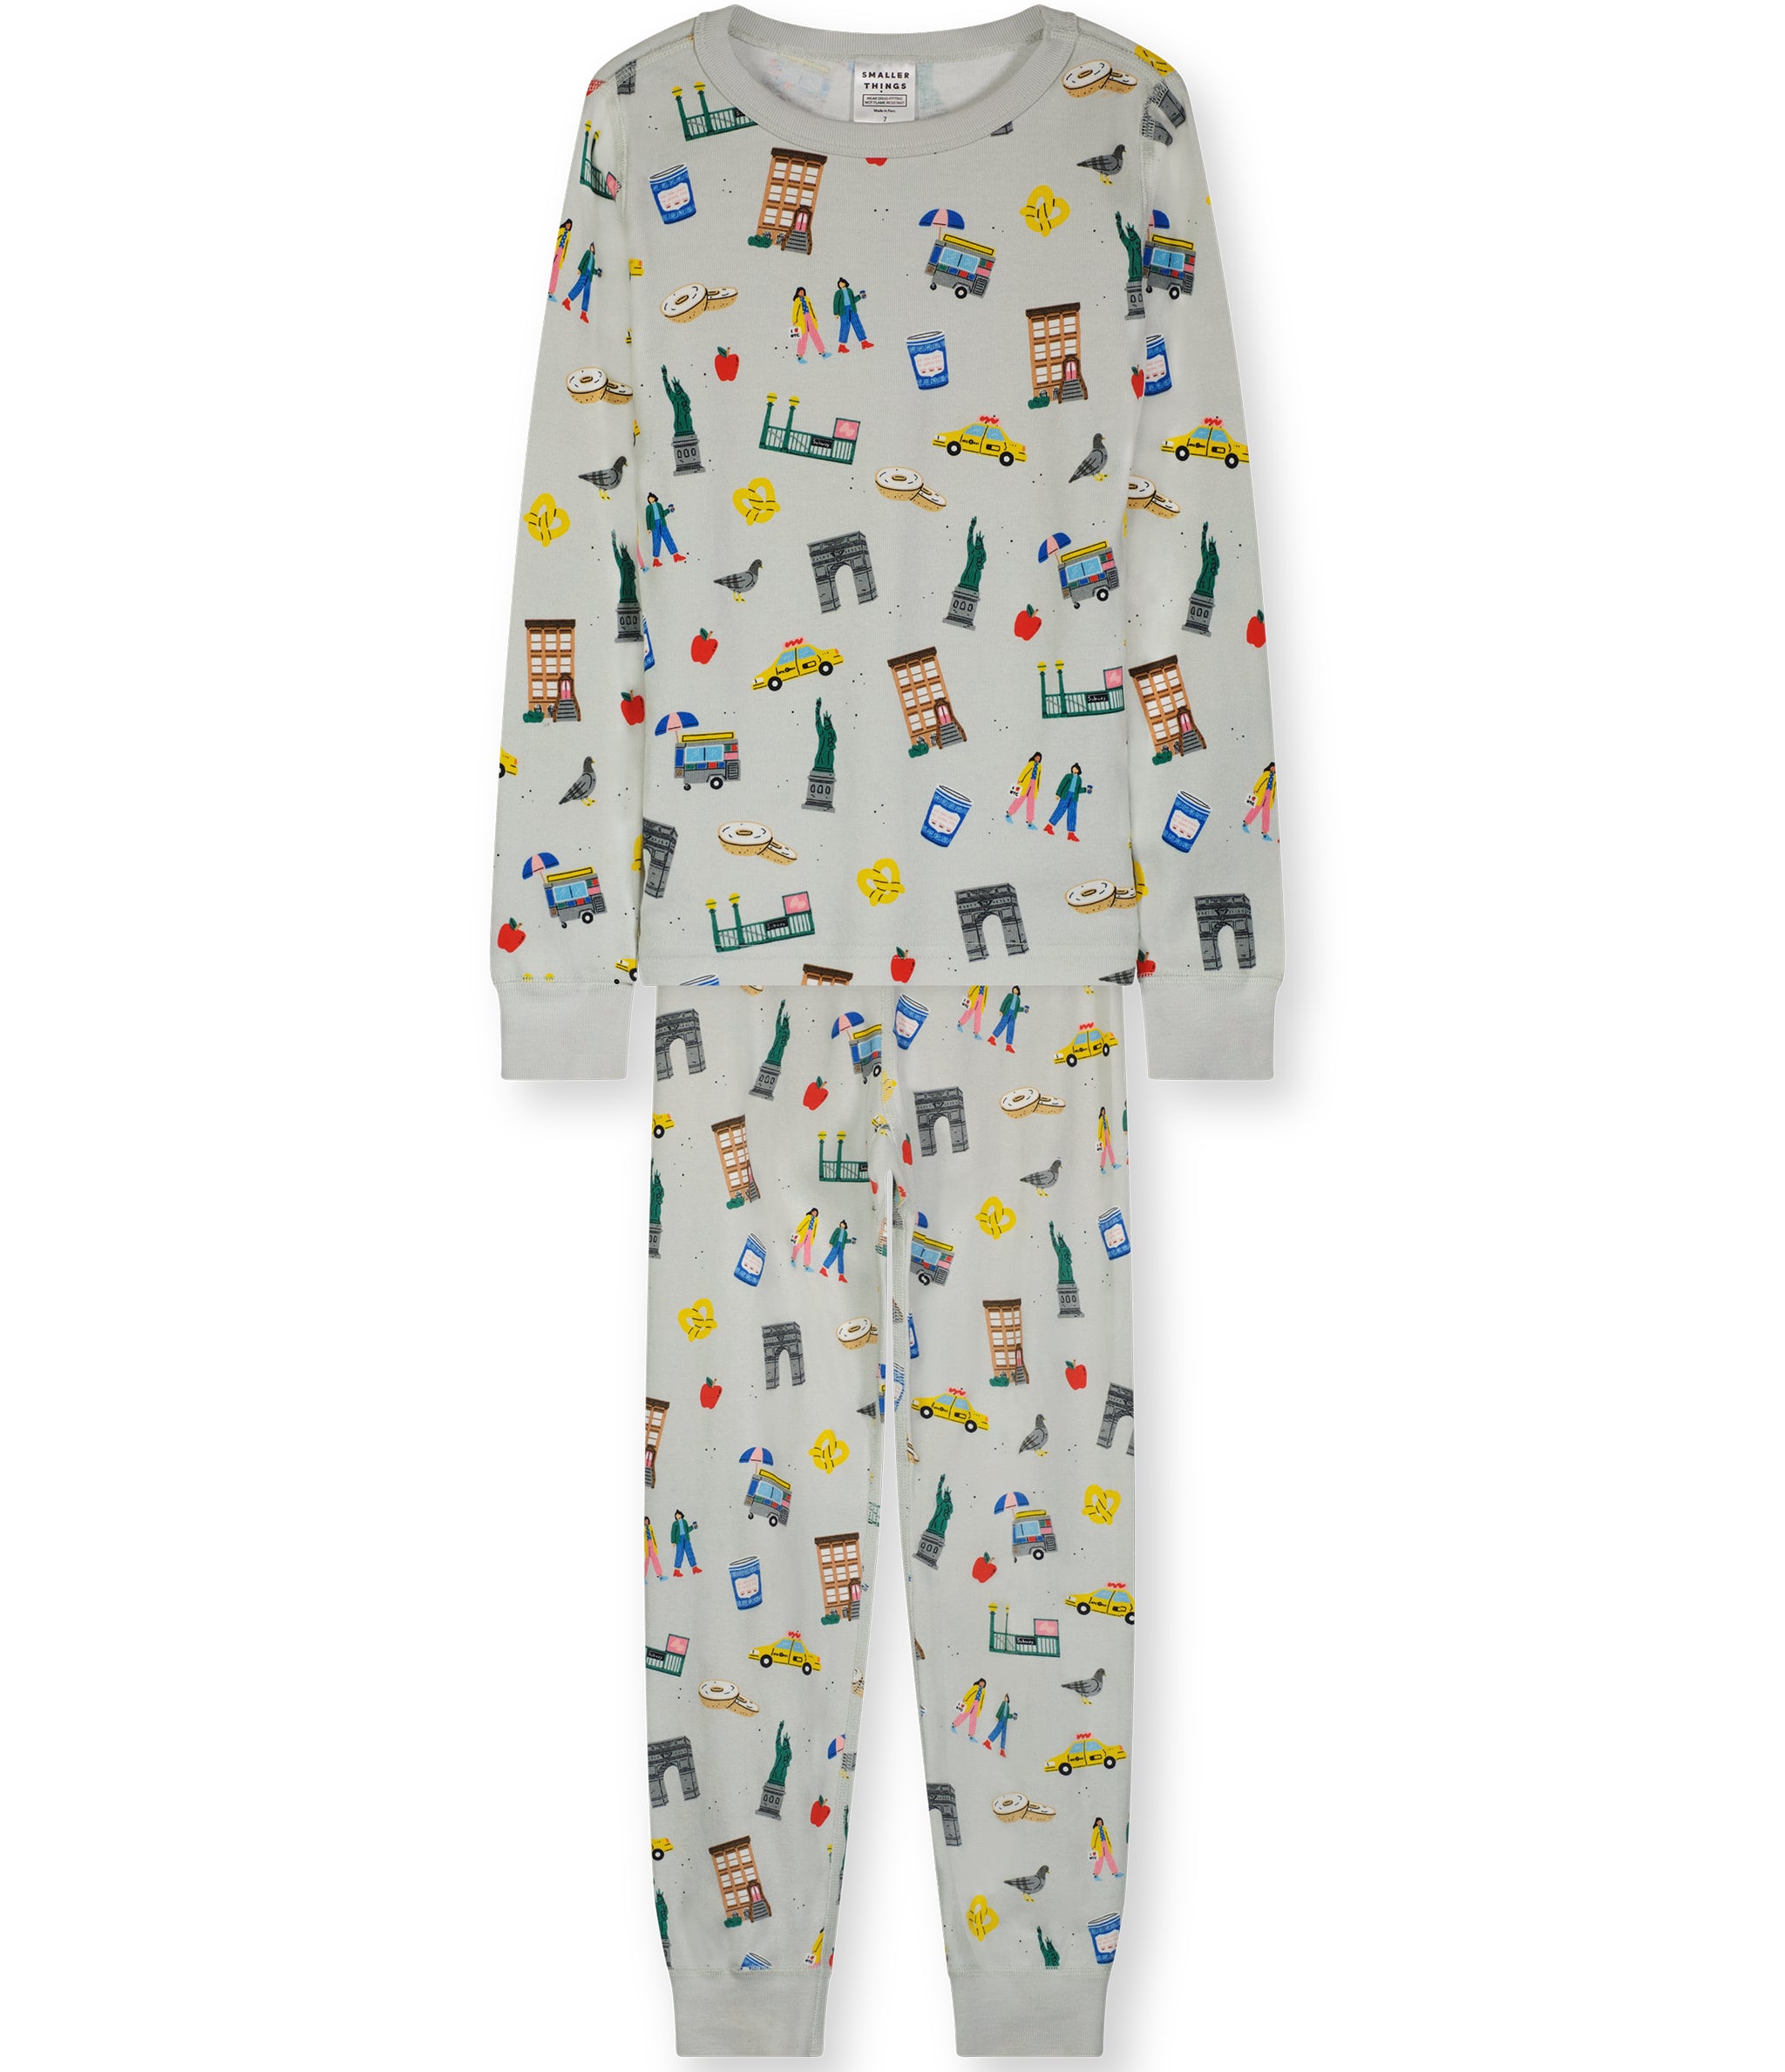 Lightning Mcqueen Pyjamas Set For Boys, Cartoon Car T-shirt And Pants  2-piece Pajamas For 4-7y, Kids Sleepwear Pj Gift